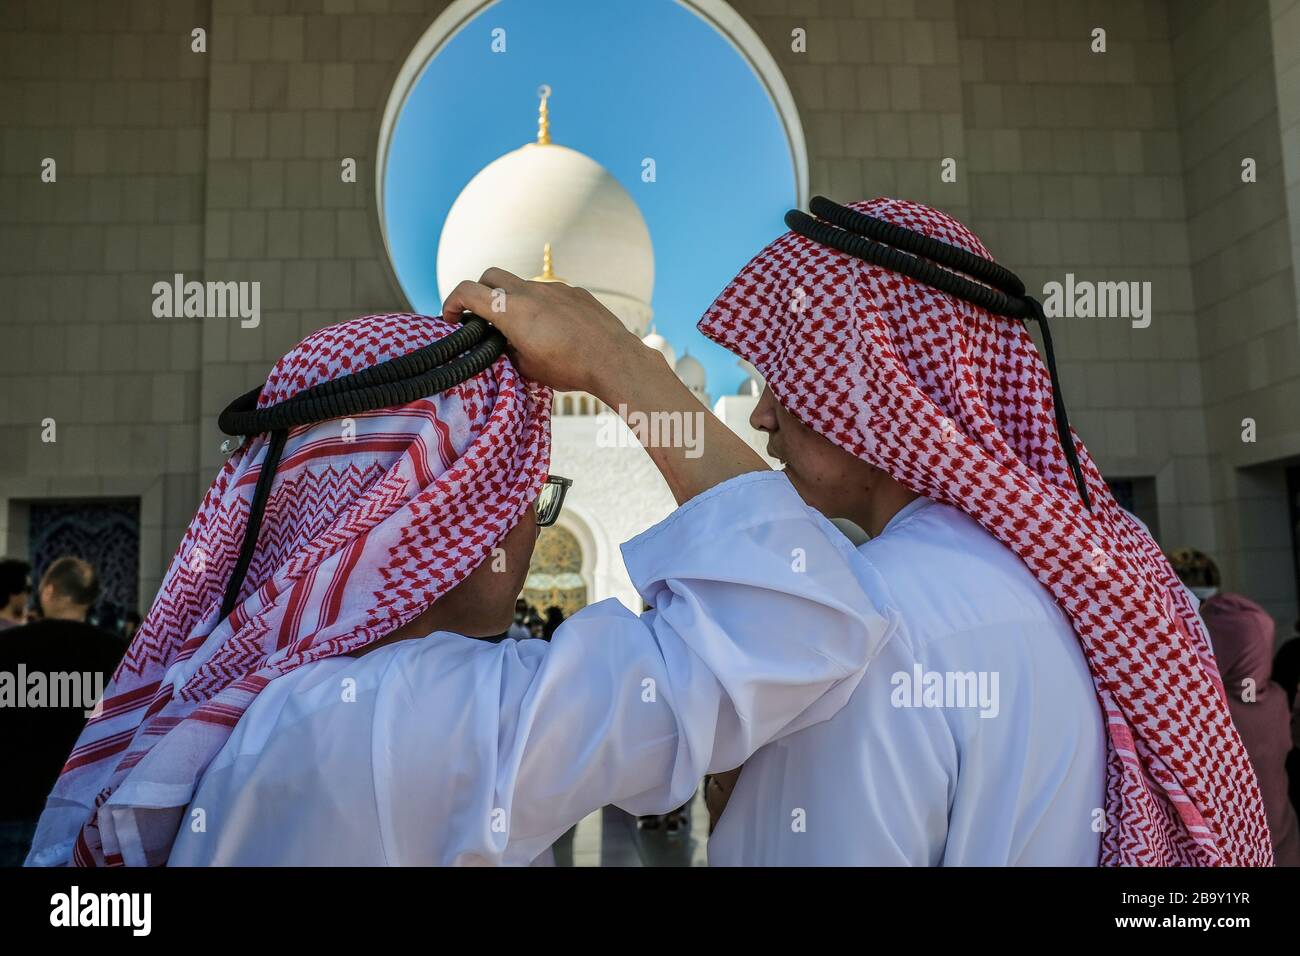 Emirats arabes Unis. Abu Dhabi. Grande Mosquée Sheikh Zayed Banque D'Images